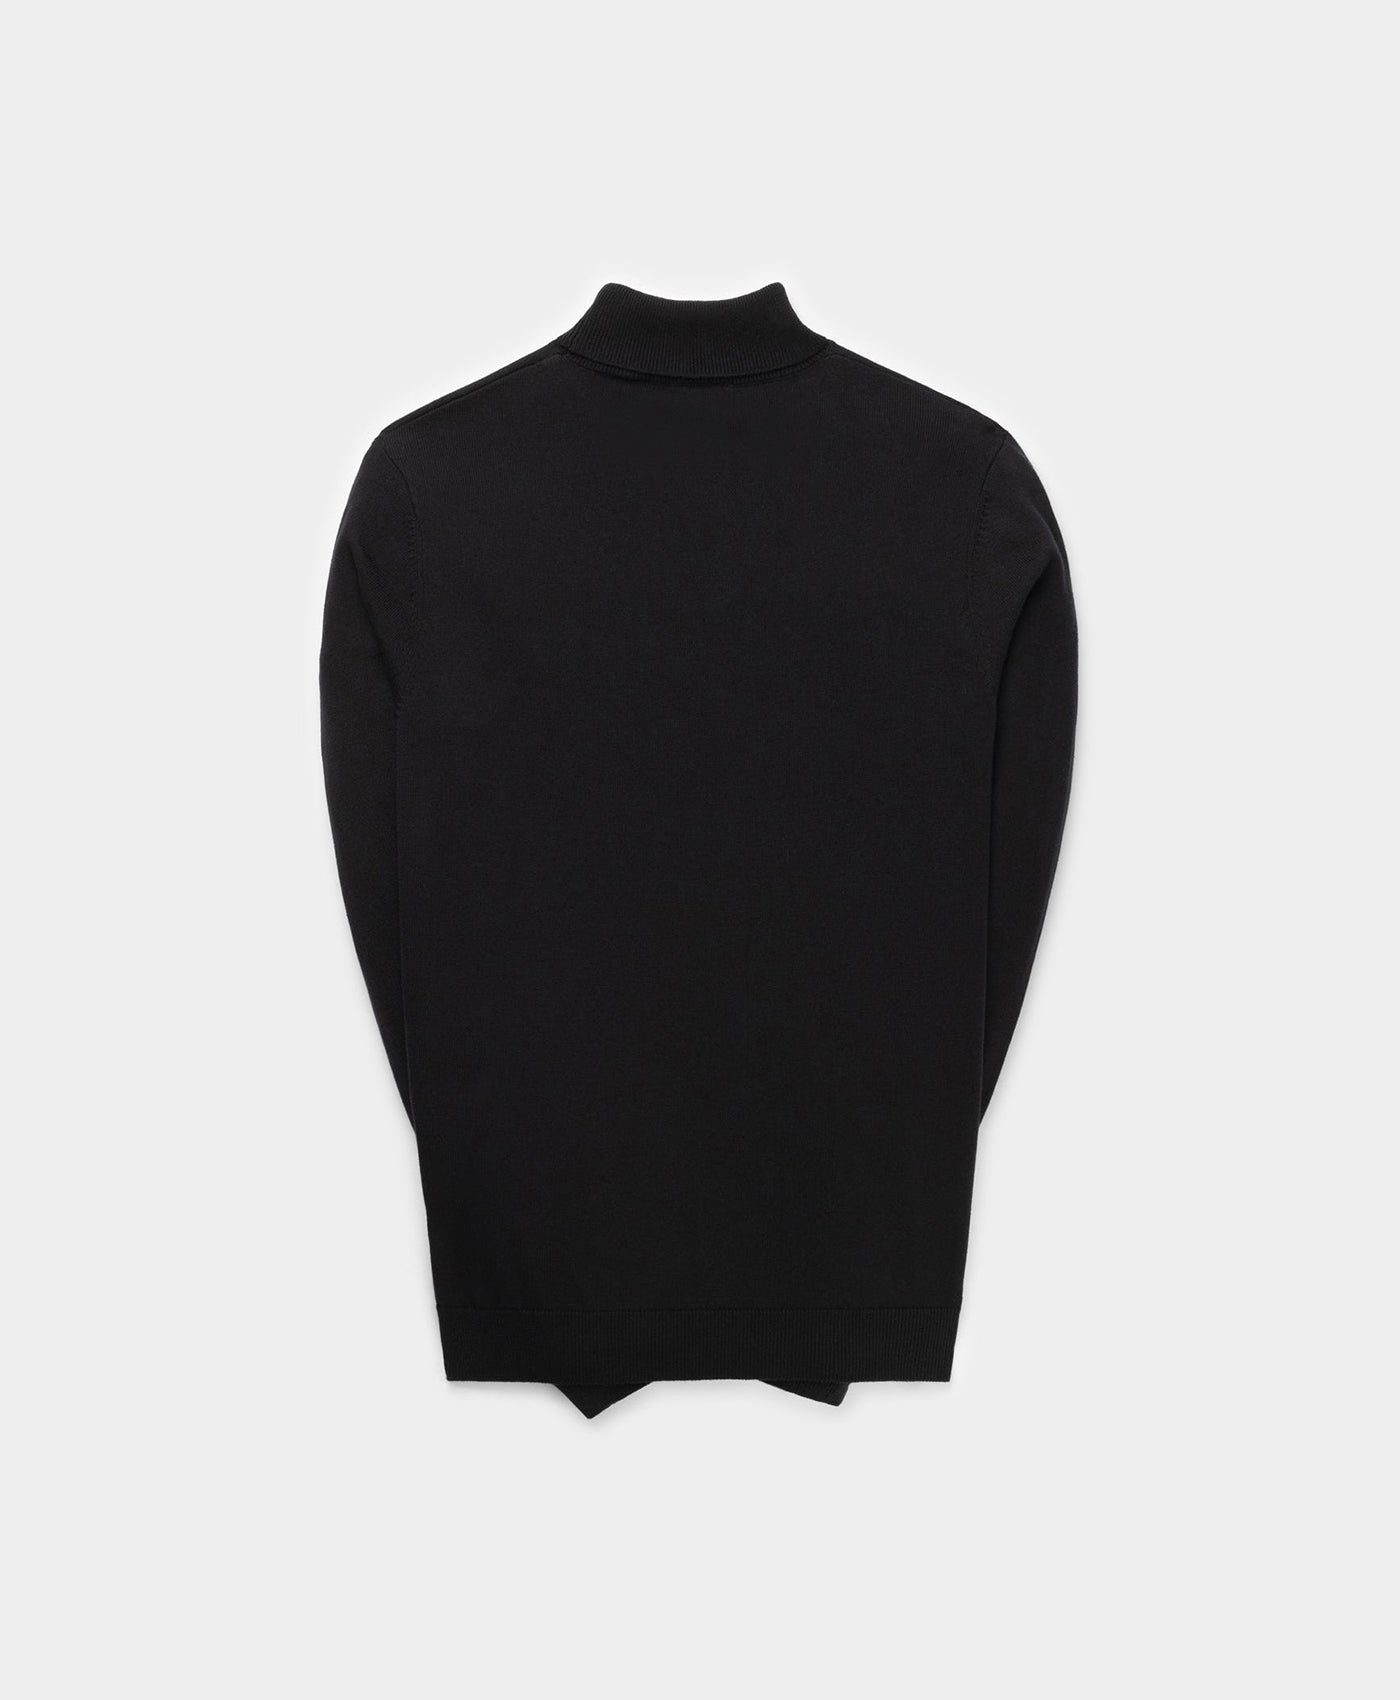 DP - Black Nedidi Sweater - Packshot - Rear